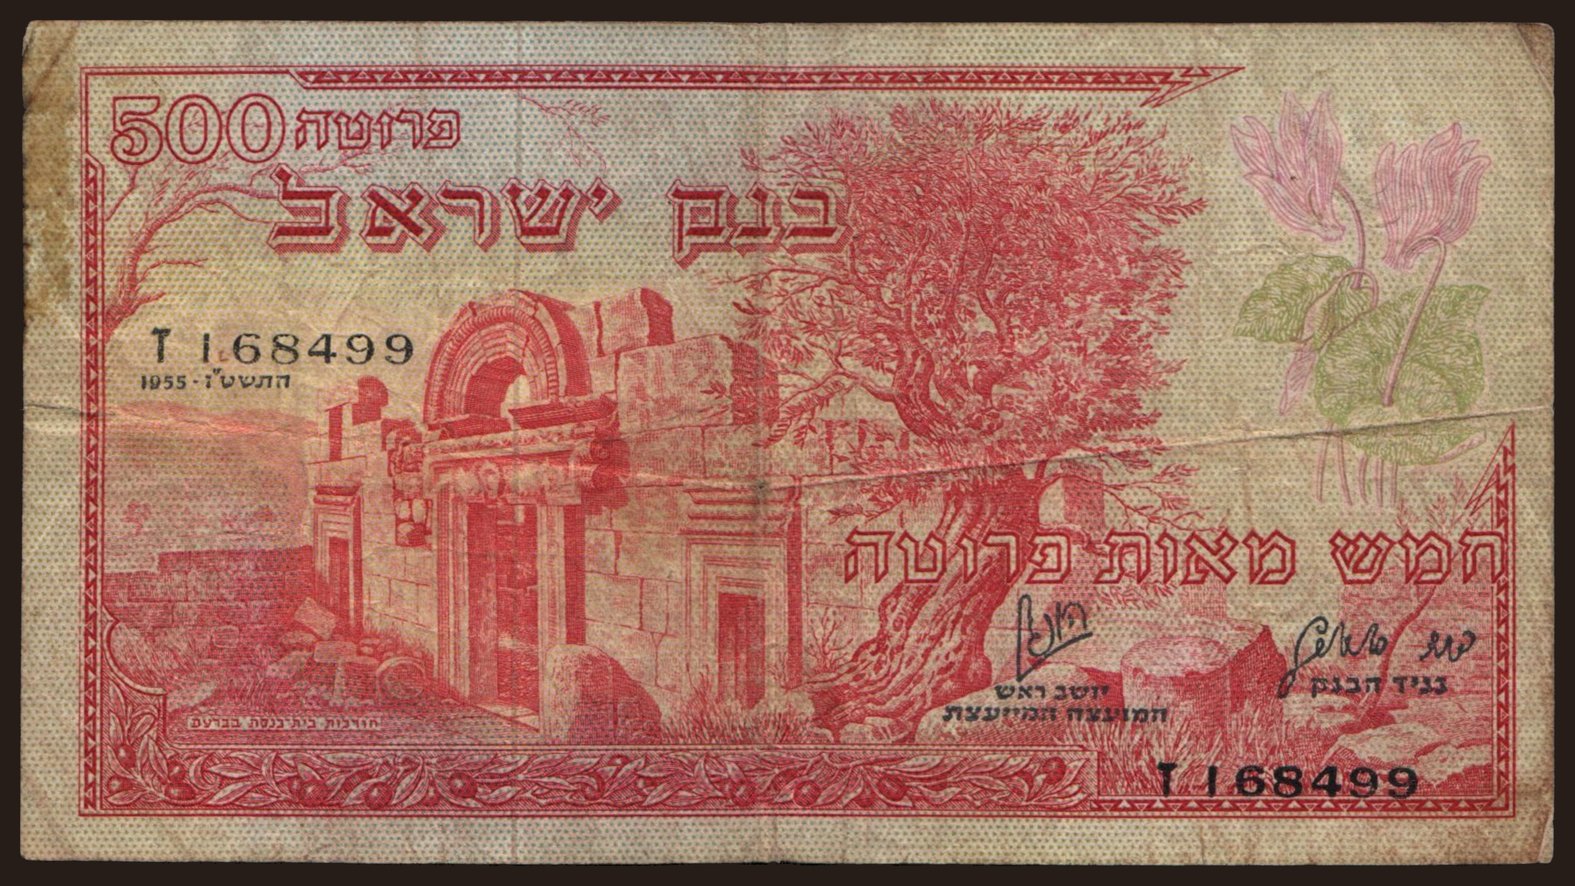 500 pruta, 1955